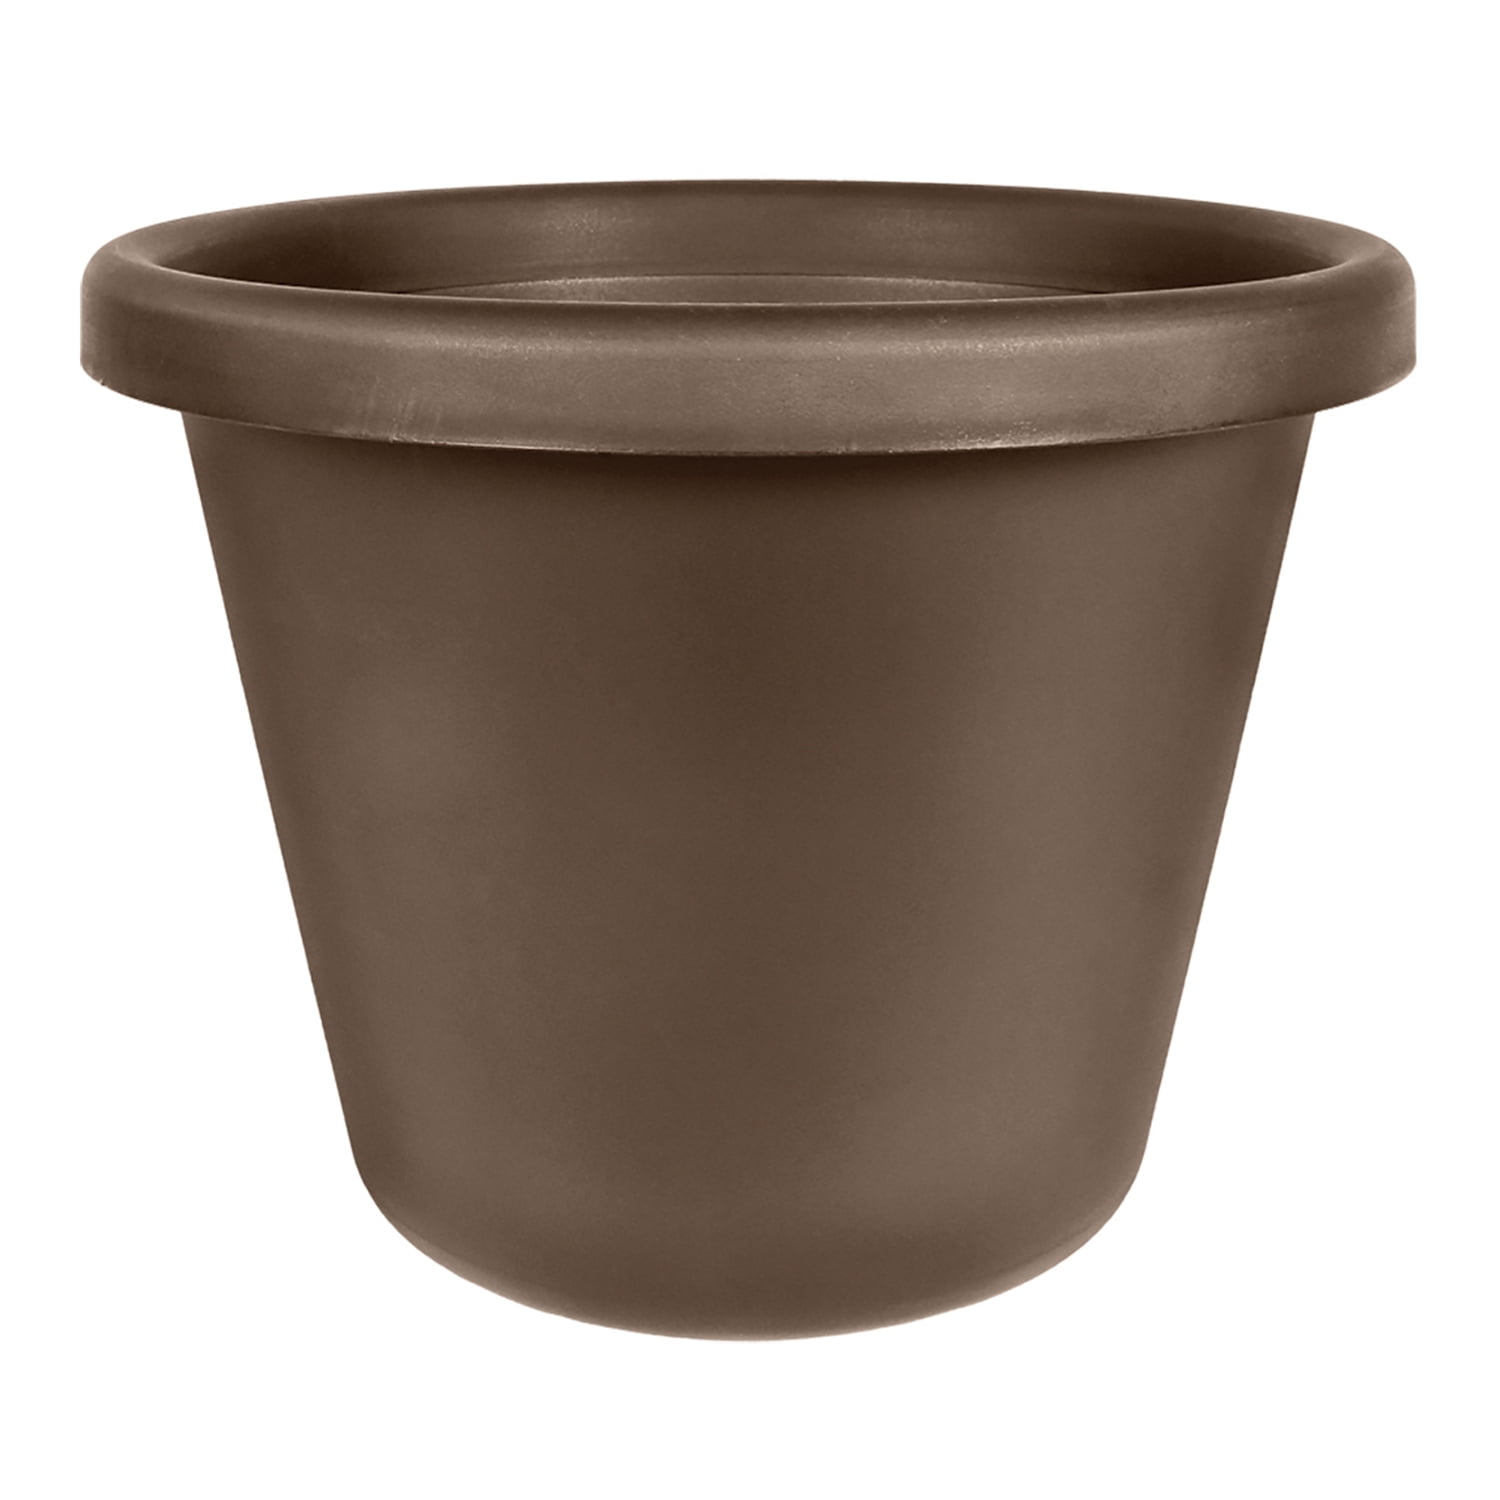 Plastic Round Flower Pot Planters Indoor Or Outdoor Flower Pots Plastic Planter 